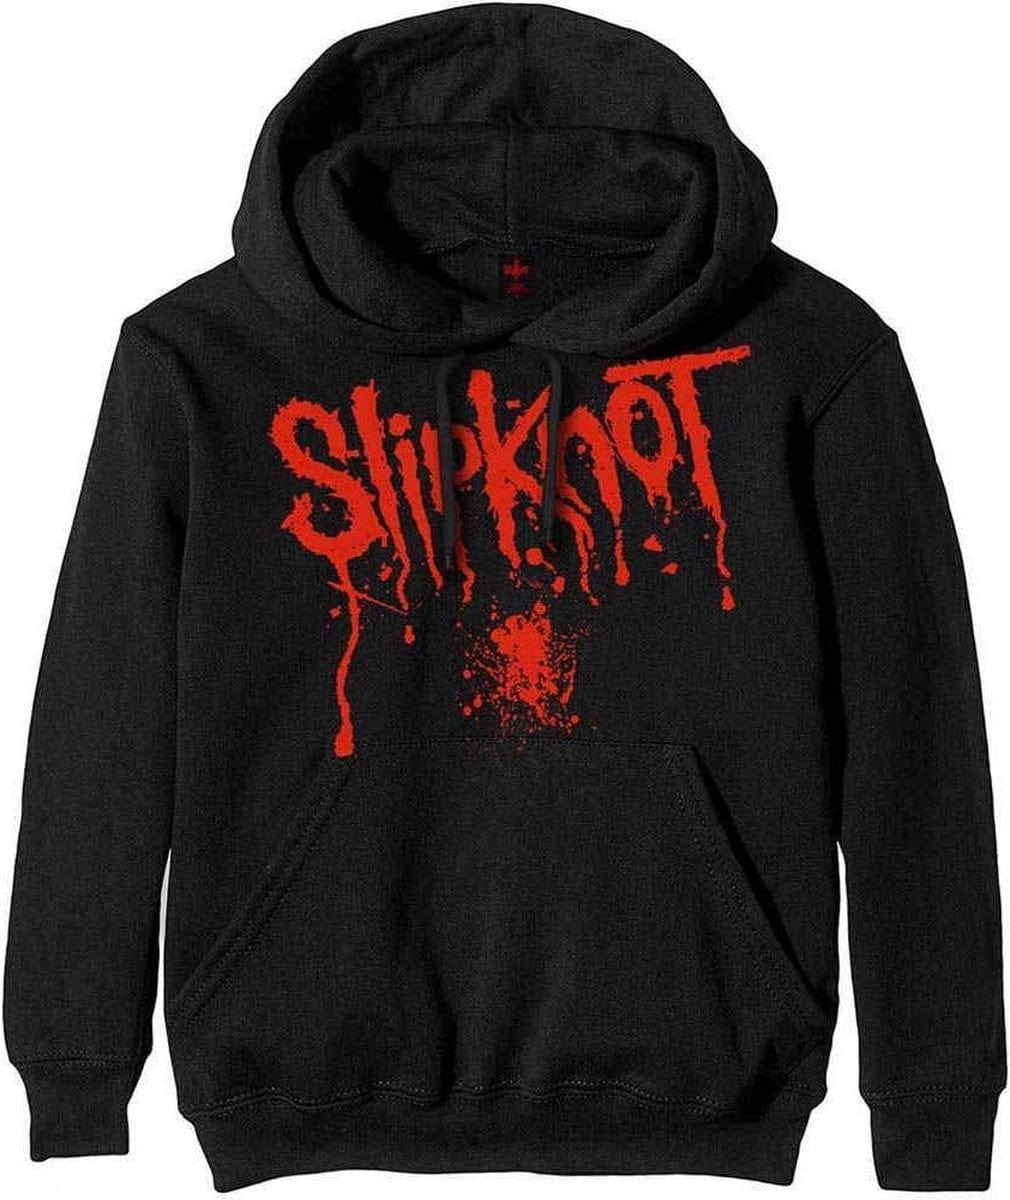 Slipknot - Splatter - Black - 2XL [Hoodies]